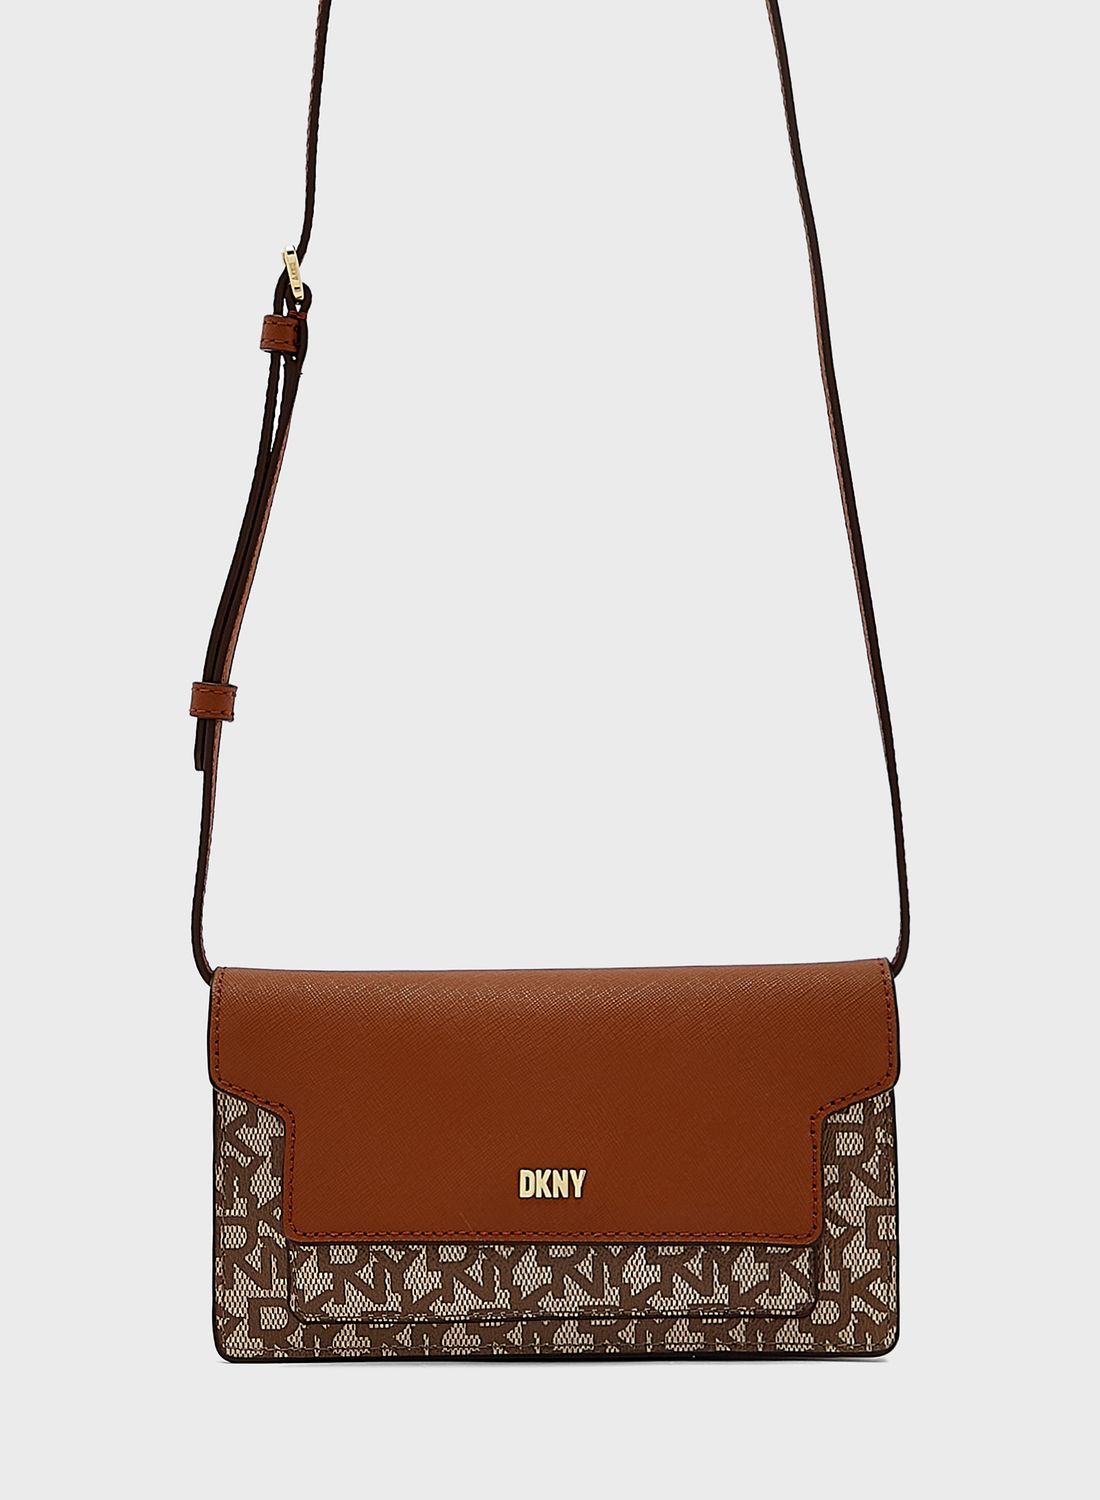 Dkny Women's Millie Leather Crossbody Bag